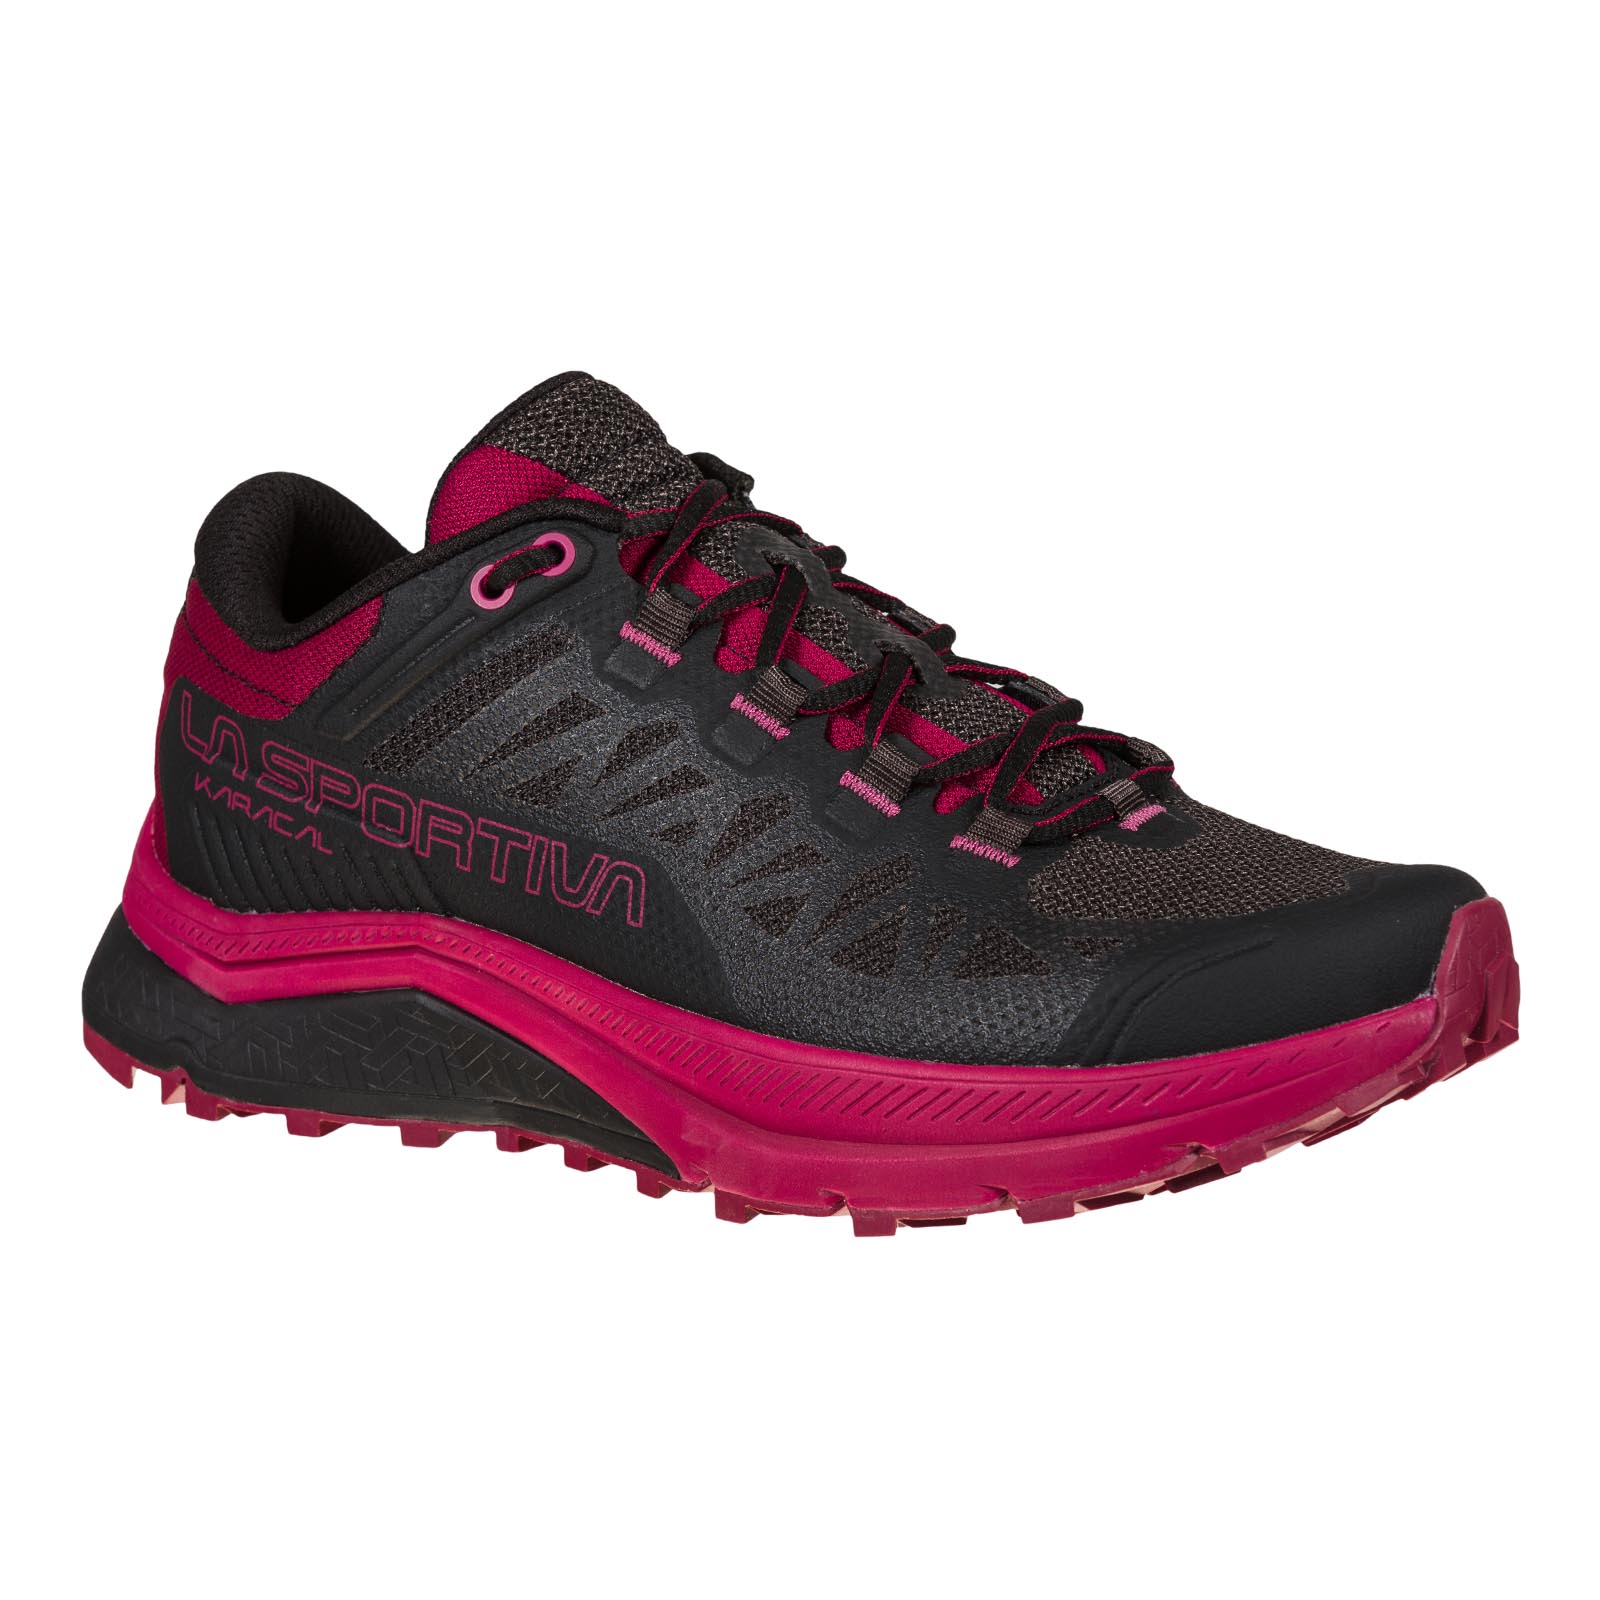 LA SPORTIVA Karacal Damen Trail Running Schuhe black/red plum